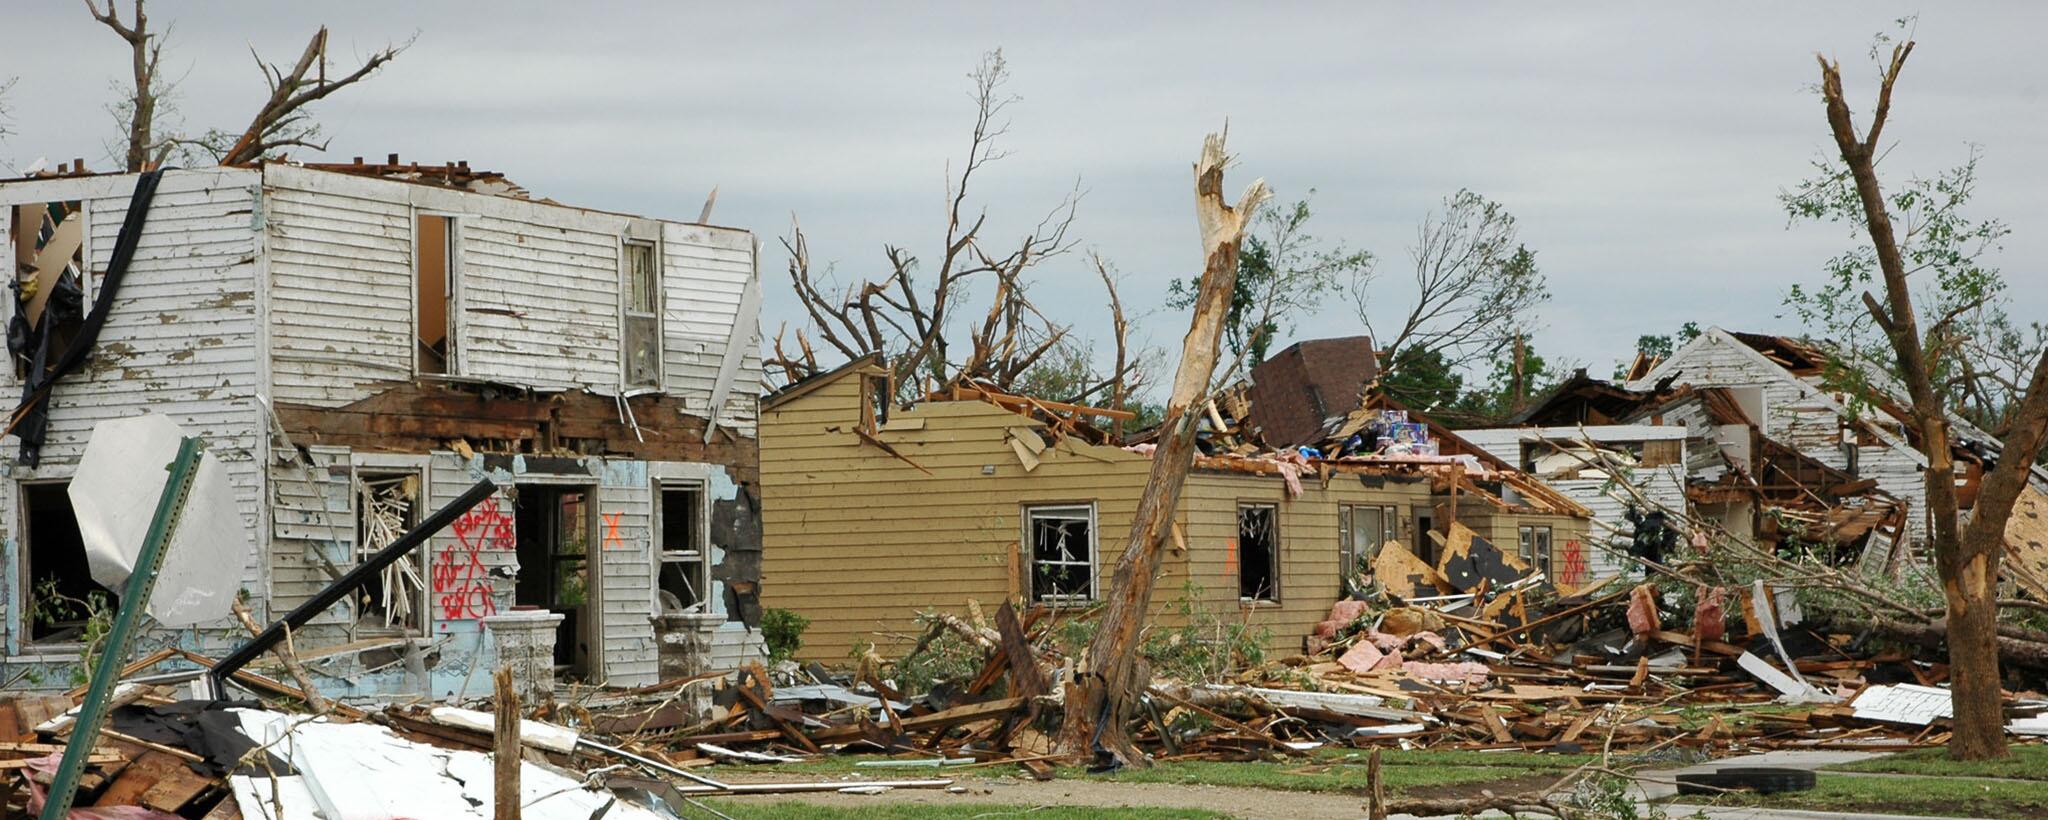 Homes severely damaged by a tornado